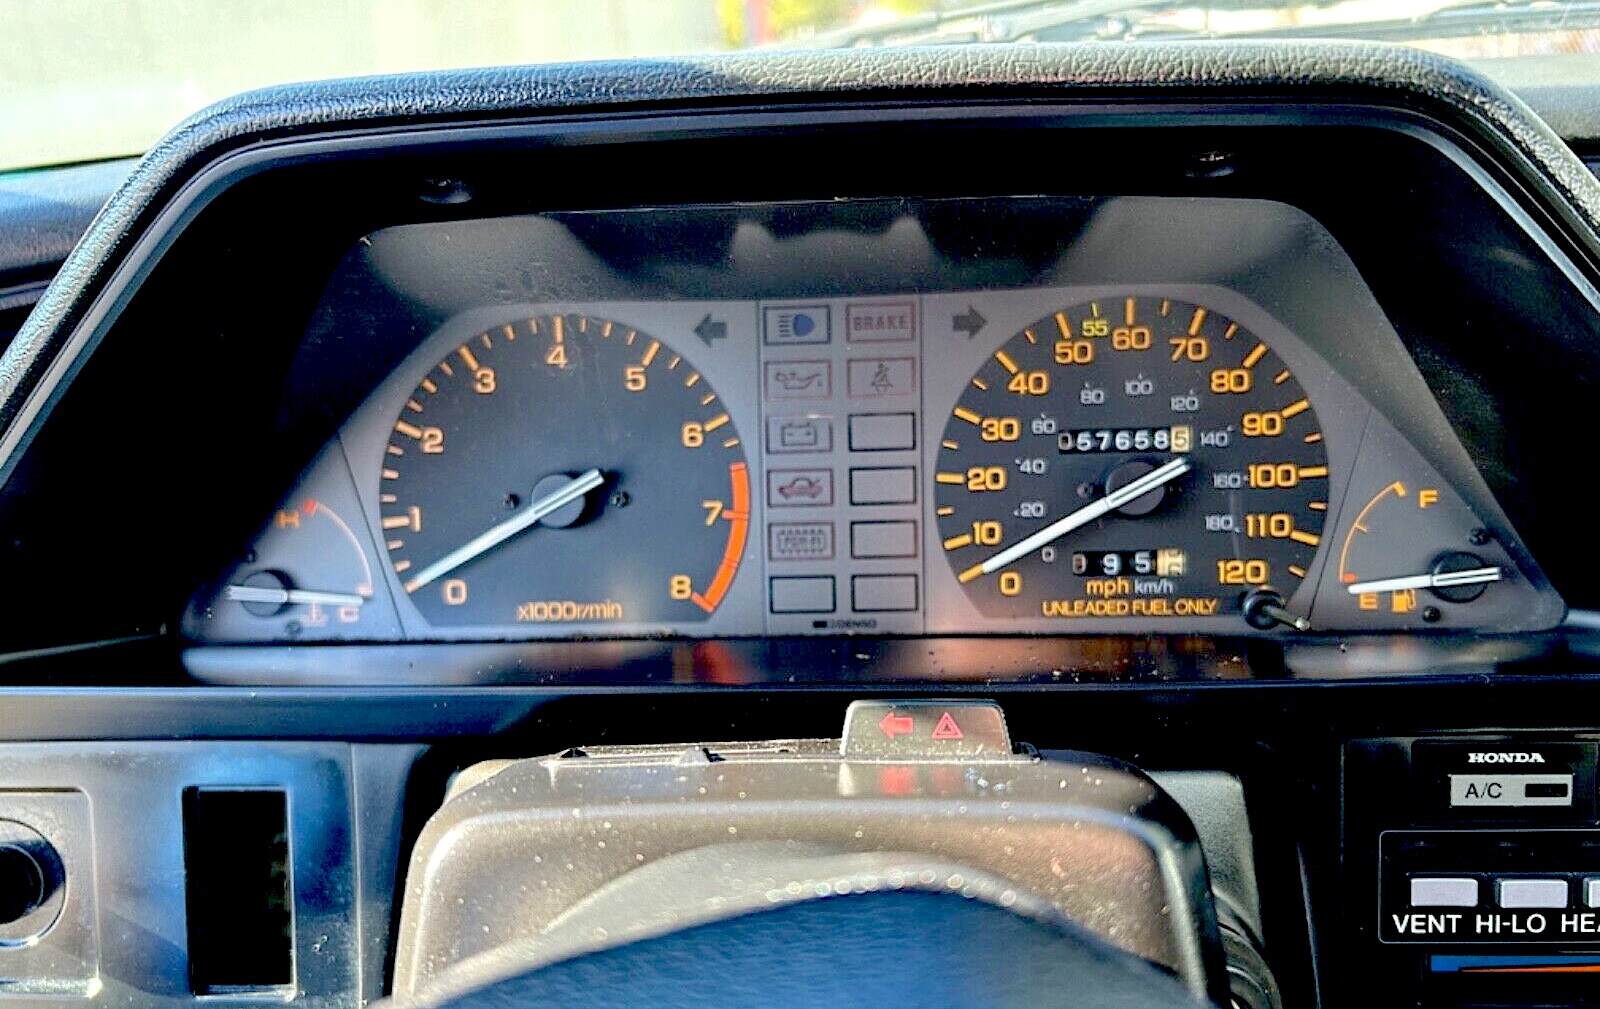 1987 Honda CRX Si instrumentation 